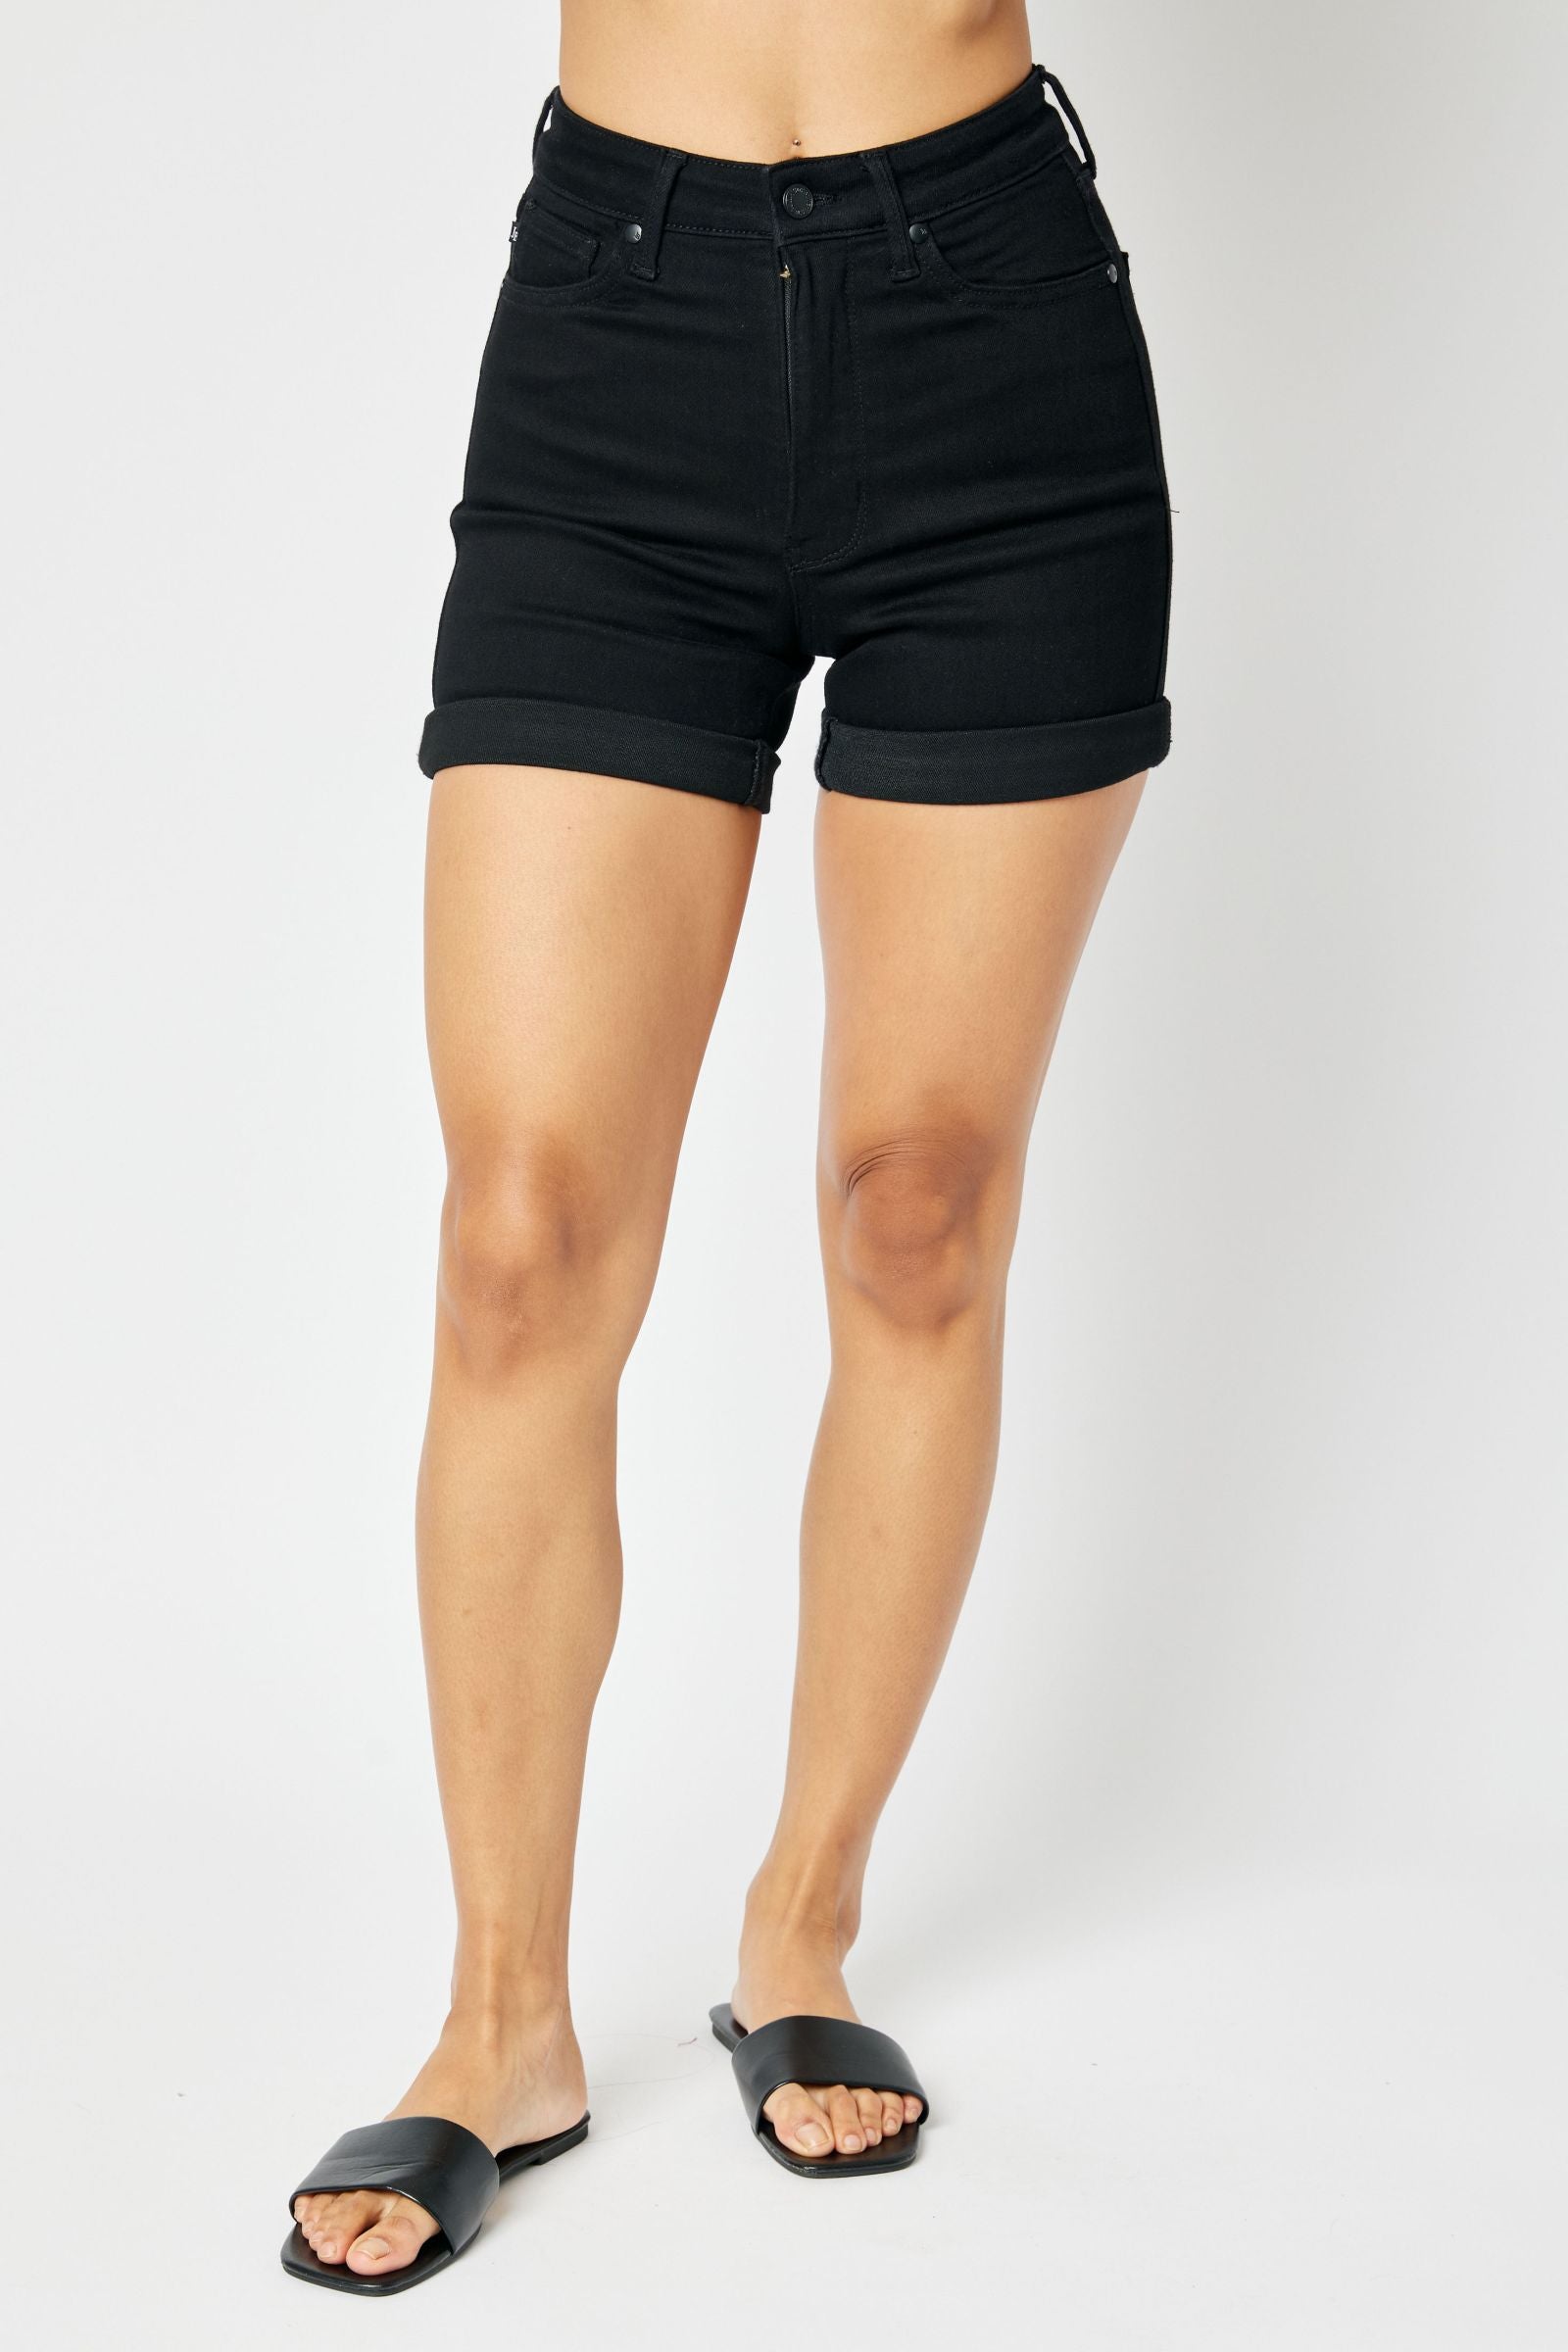 Judy Blue High Waist Black Shorts – Polished Boutique